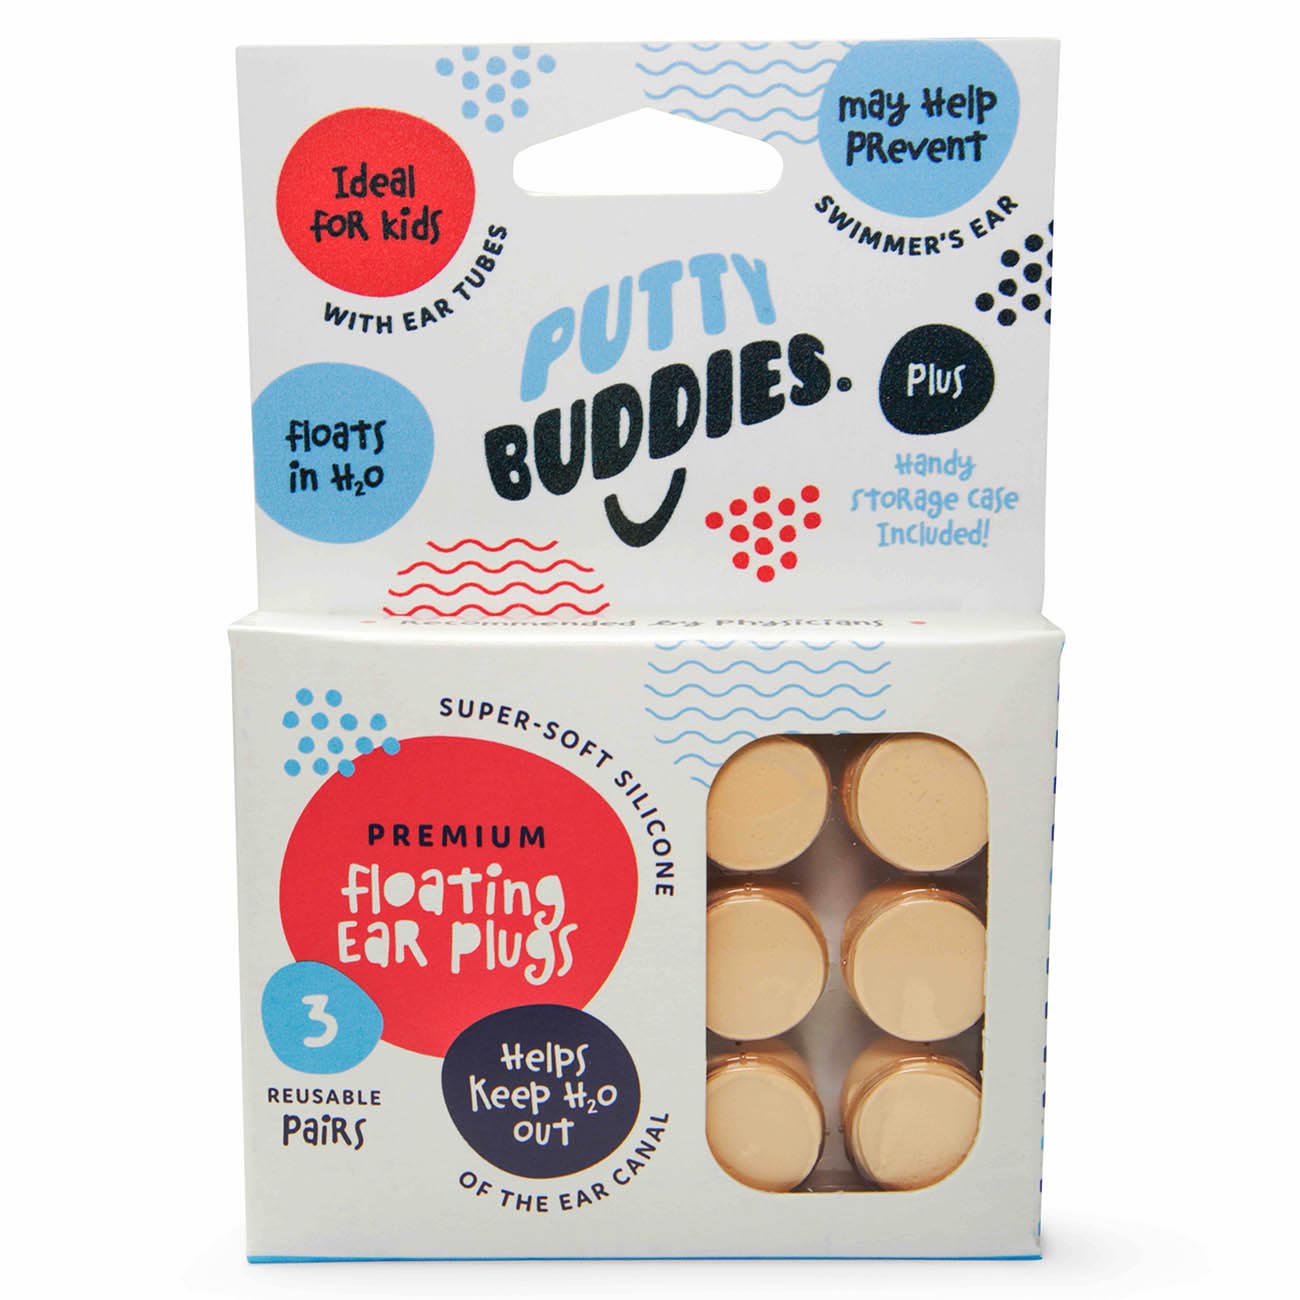 Putty Buddies FLoating swimming earplugs - Tan